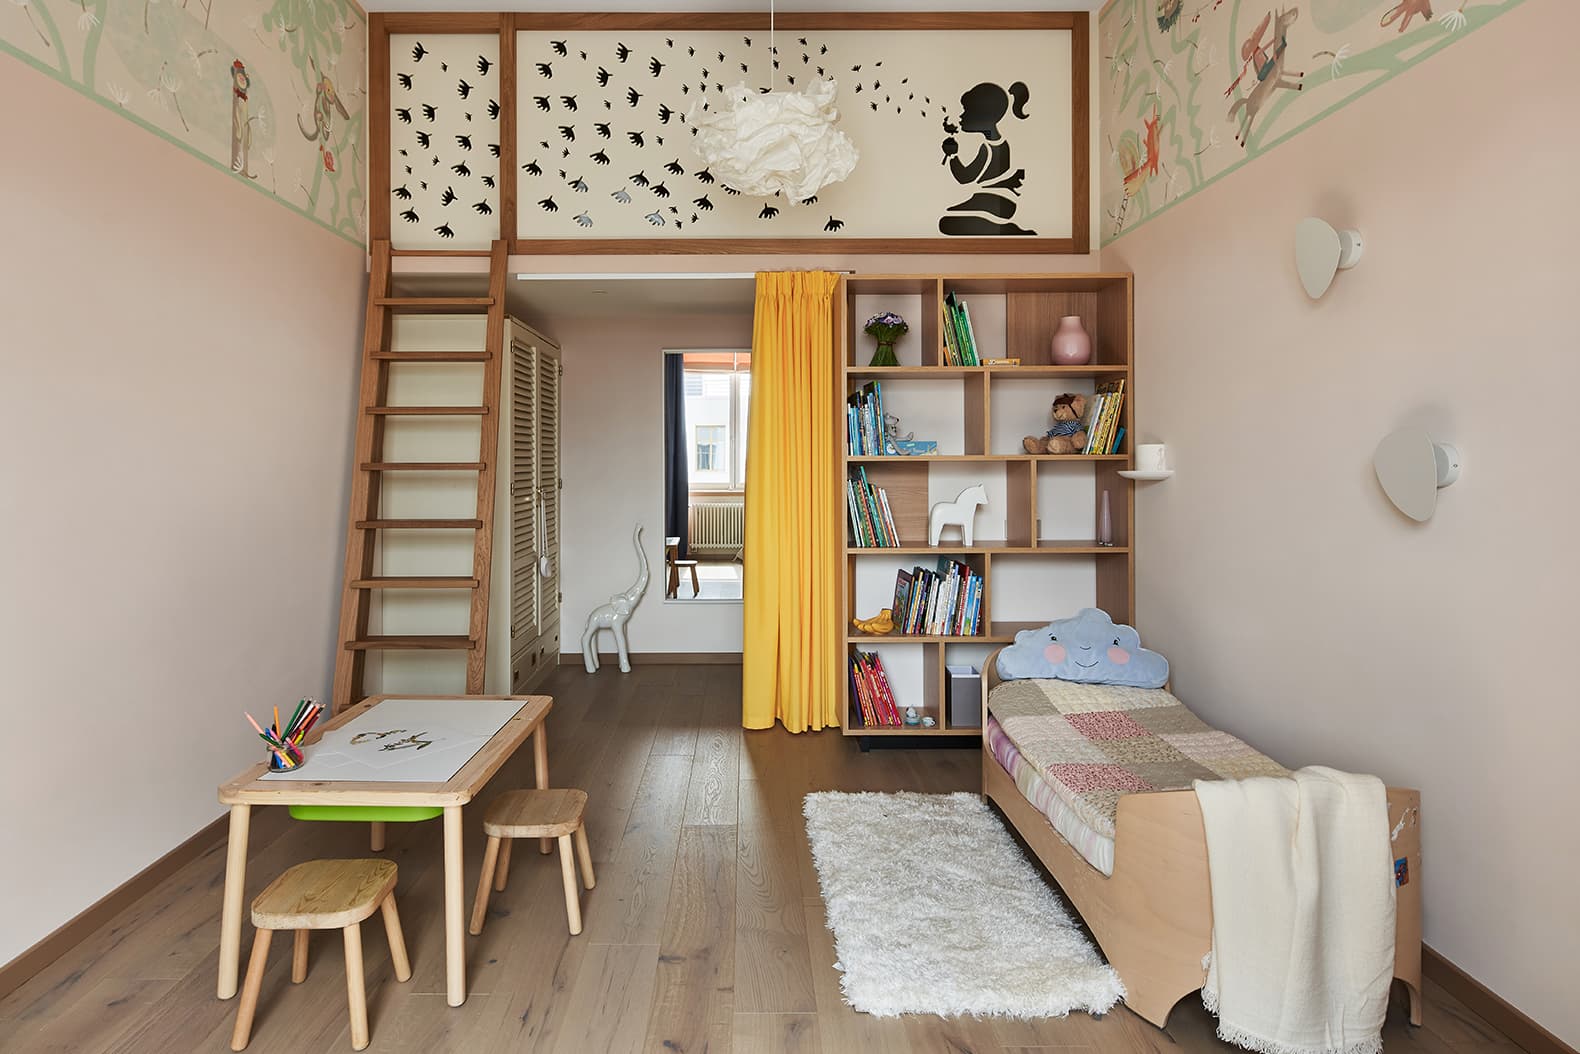 Квартира с камином в стиле эко-минимализм — проект архитектурного бюро Nikolai Bannikov Interiors